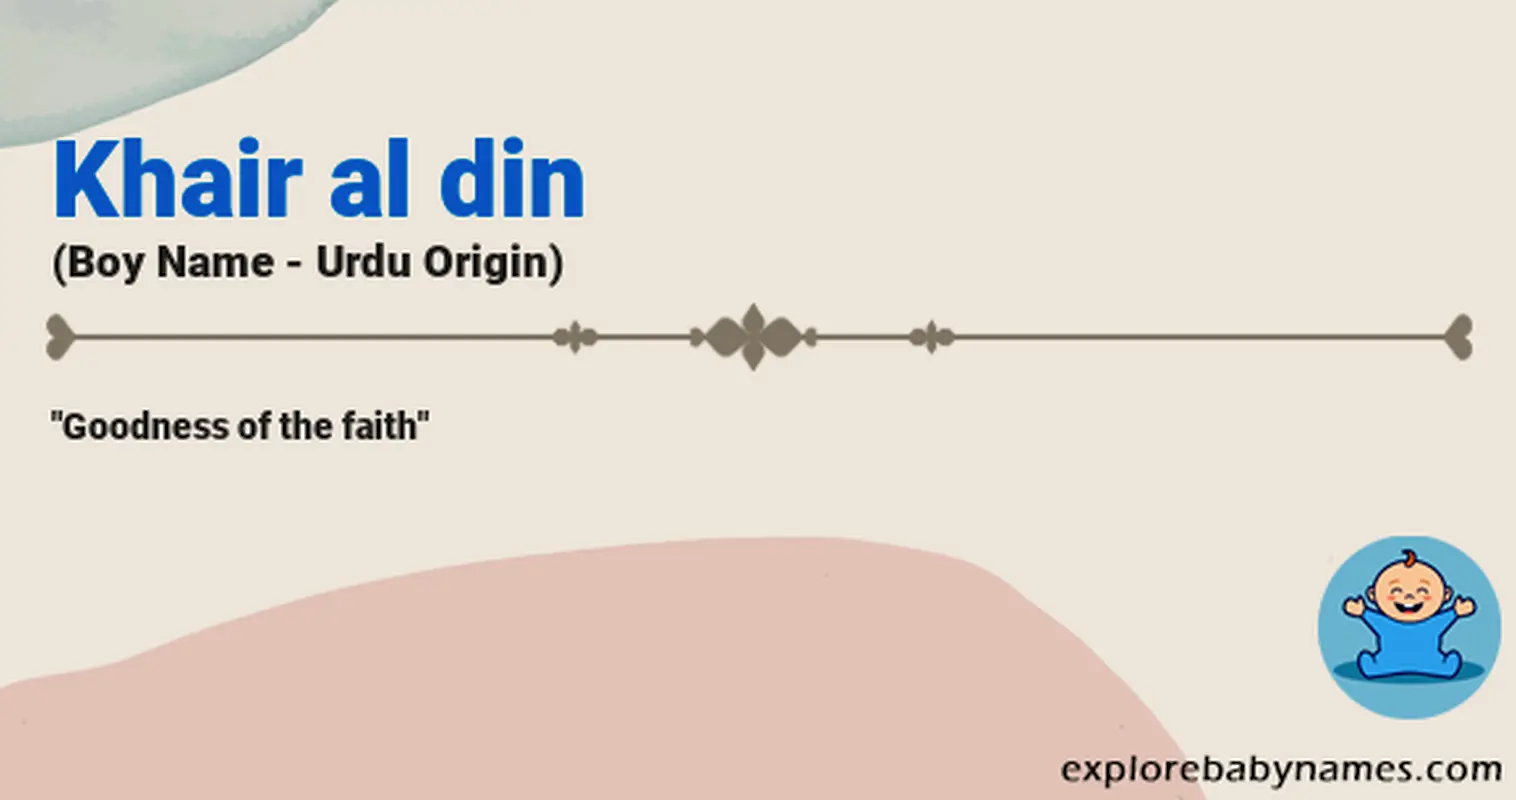 Meaning of Khair al din